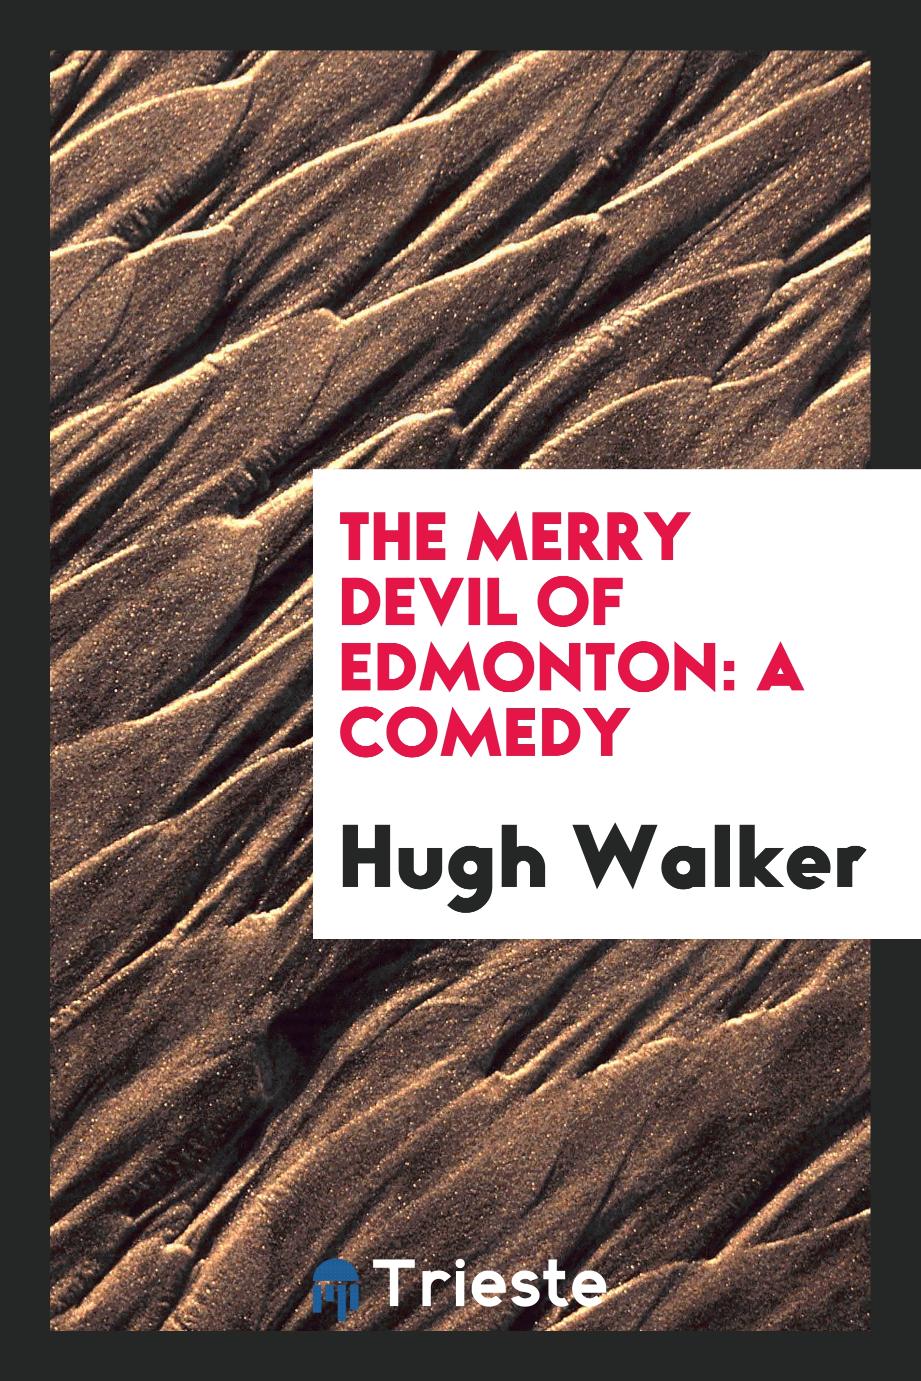 The merry devil of Edmonton: A comedy